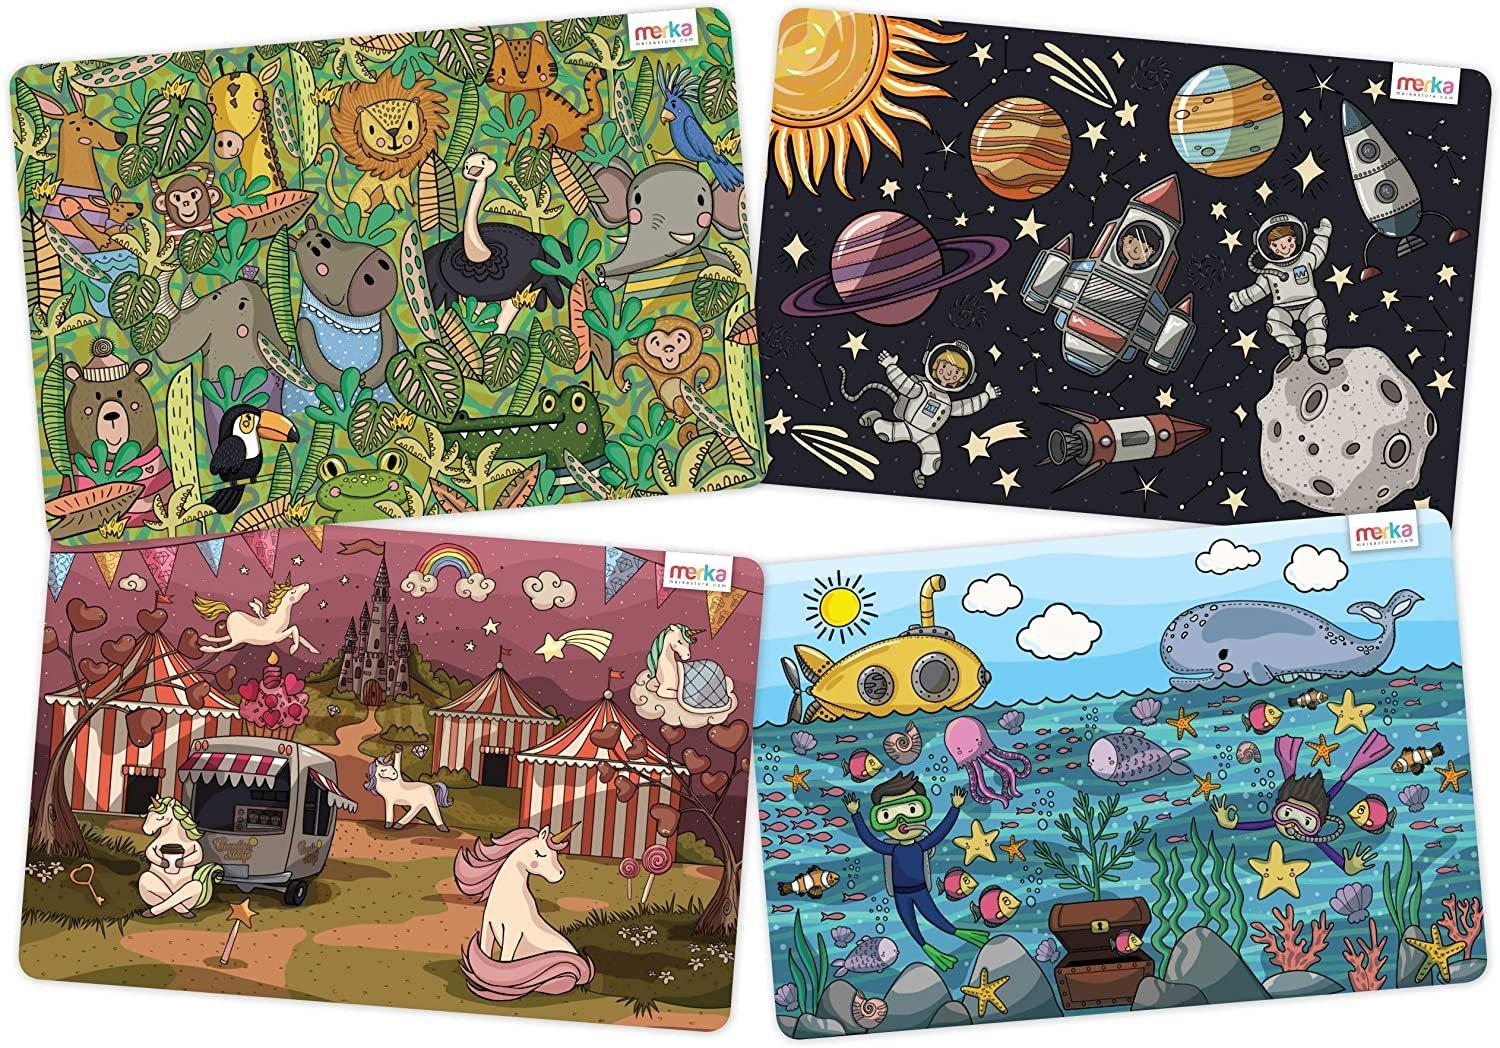 merka Designer Set Ocean, Space, Jungle, and Unicorns - 4 Pack Educational Non-Slip Placemats (GameStop)